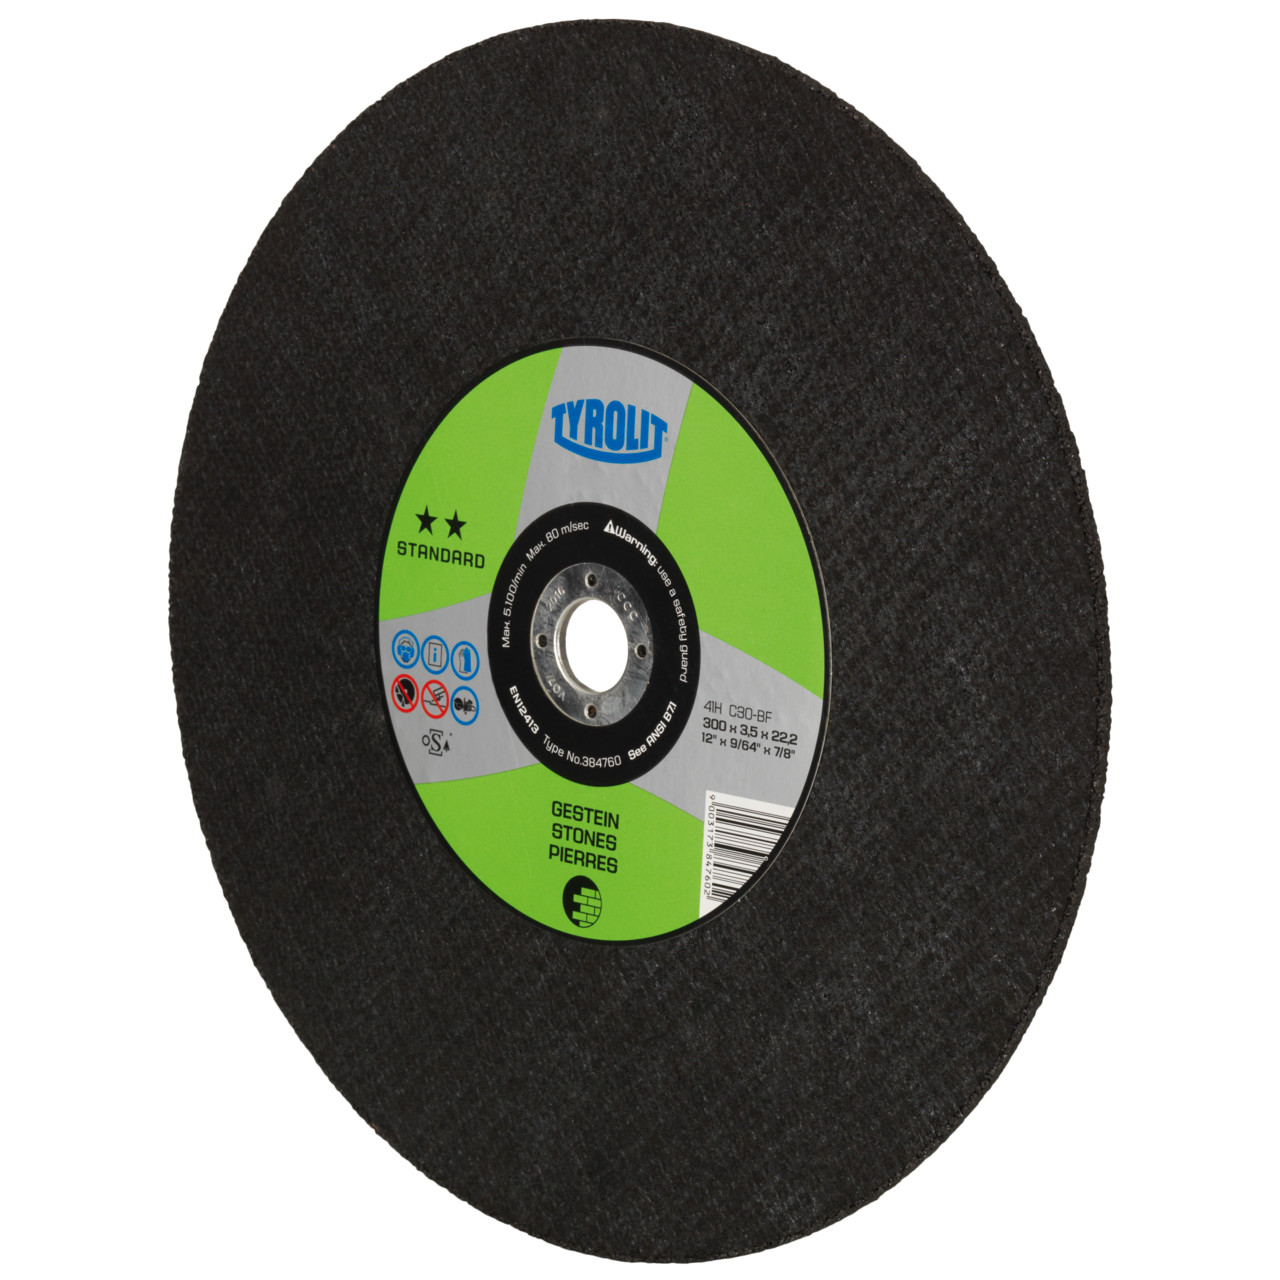 Tyrolit Cutting discs DxDxH 300x3.5x20 For stone, shape: 41 - straight version, Art. 384759